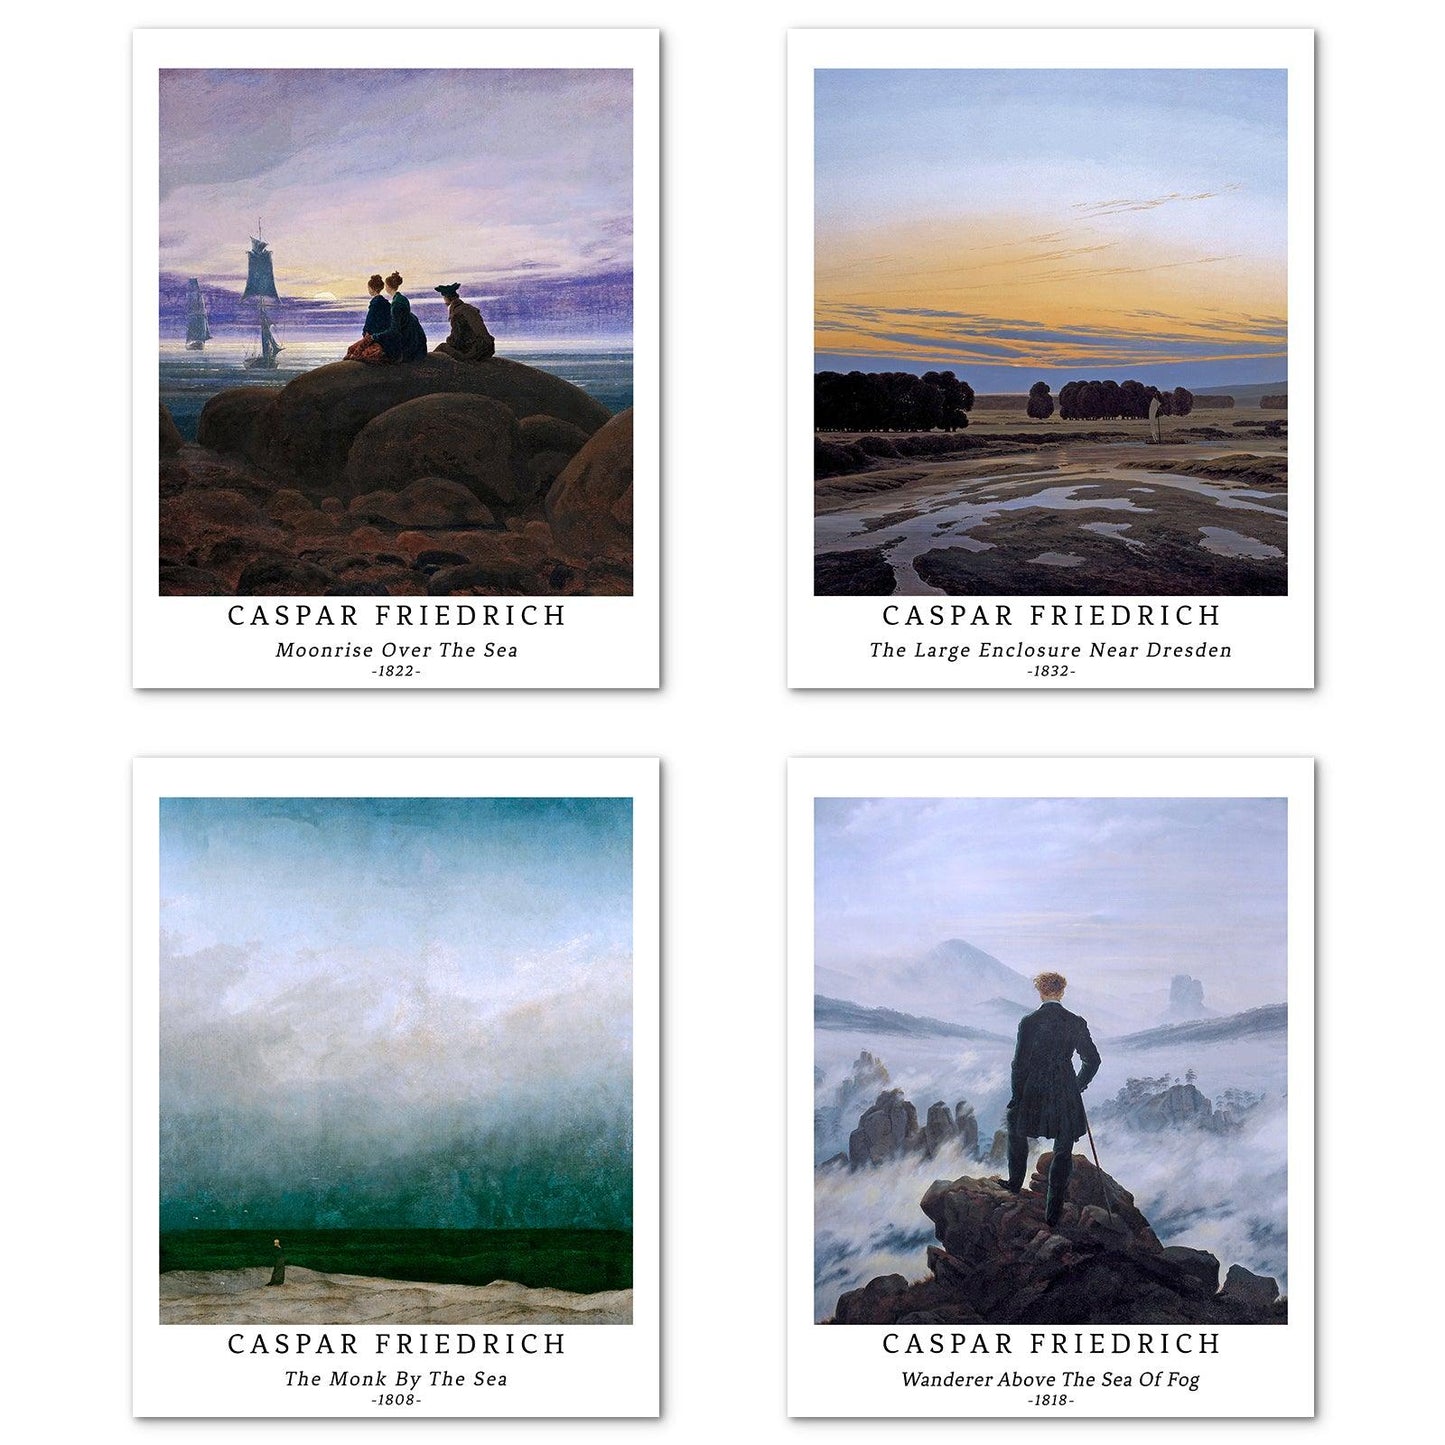 Classical Landscape Art Paper Giclee Prints Set of 4 (Caspar Friedrich Series) - Berkin Arts